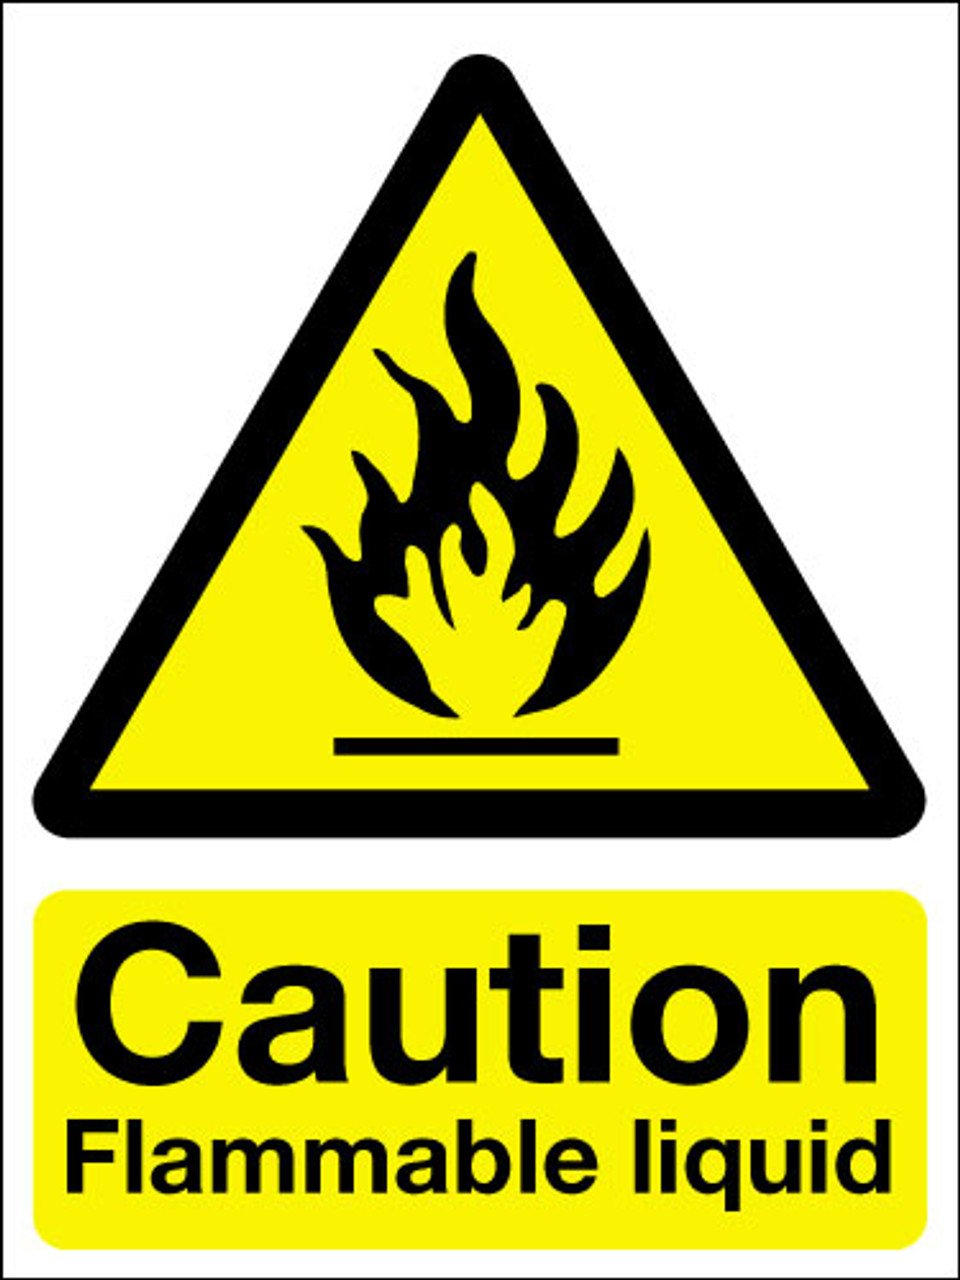 Caution flammable liquid sign